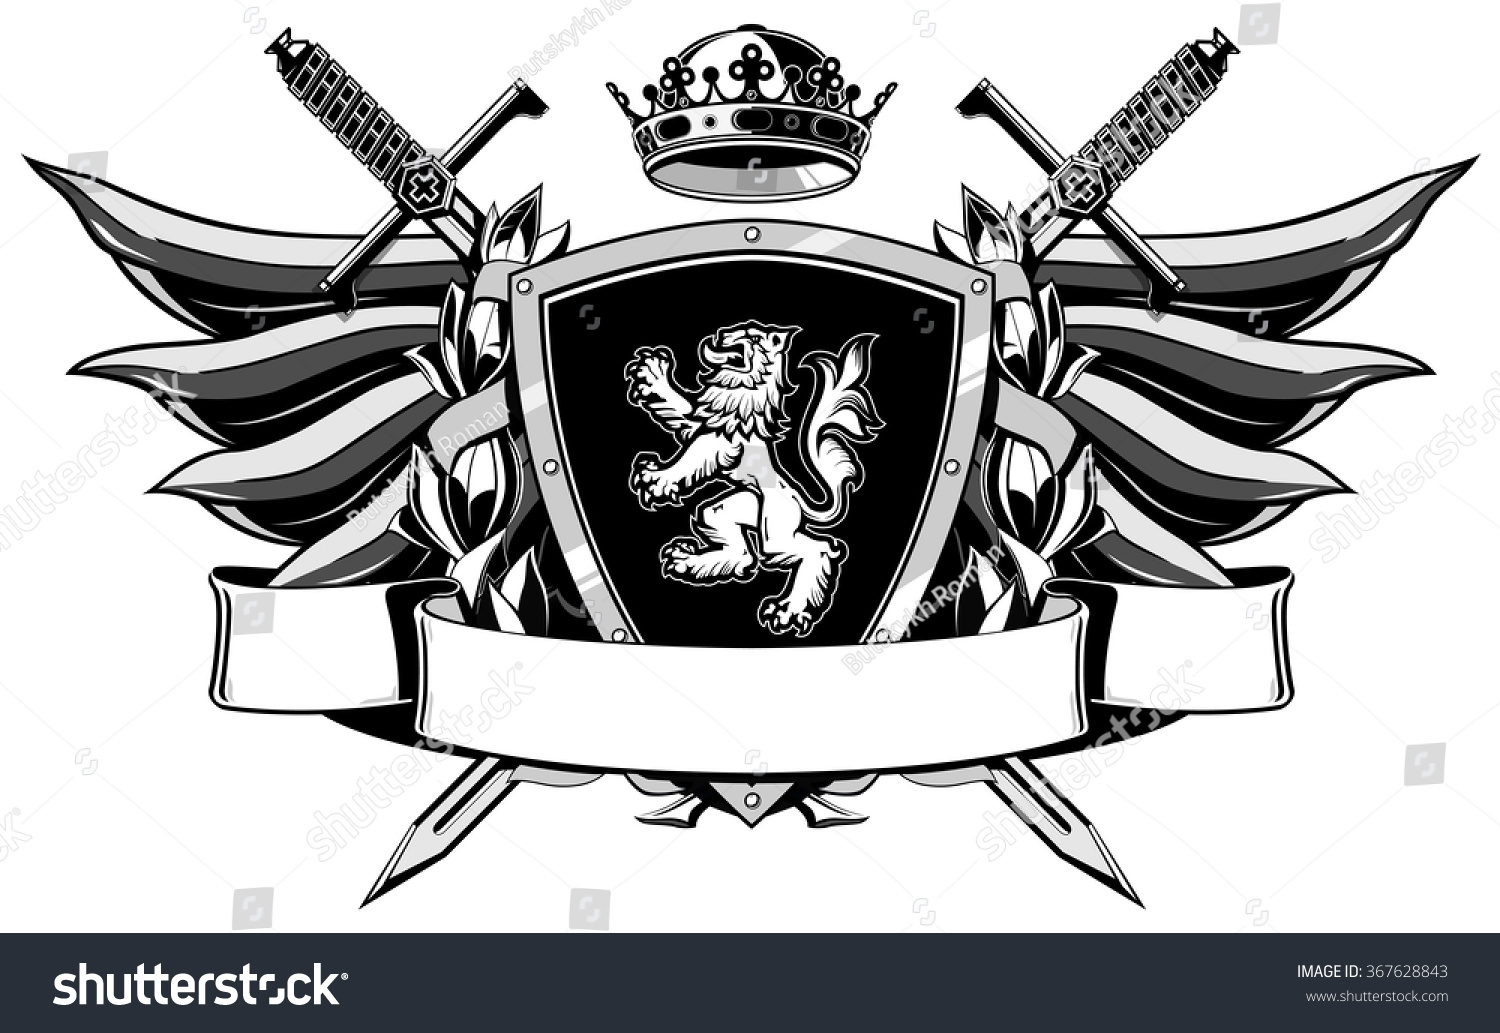 Герб с двумя мечами